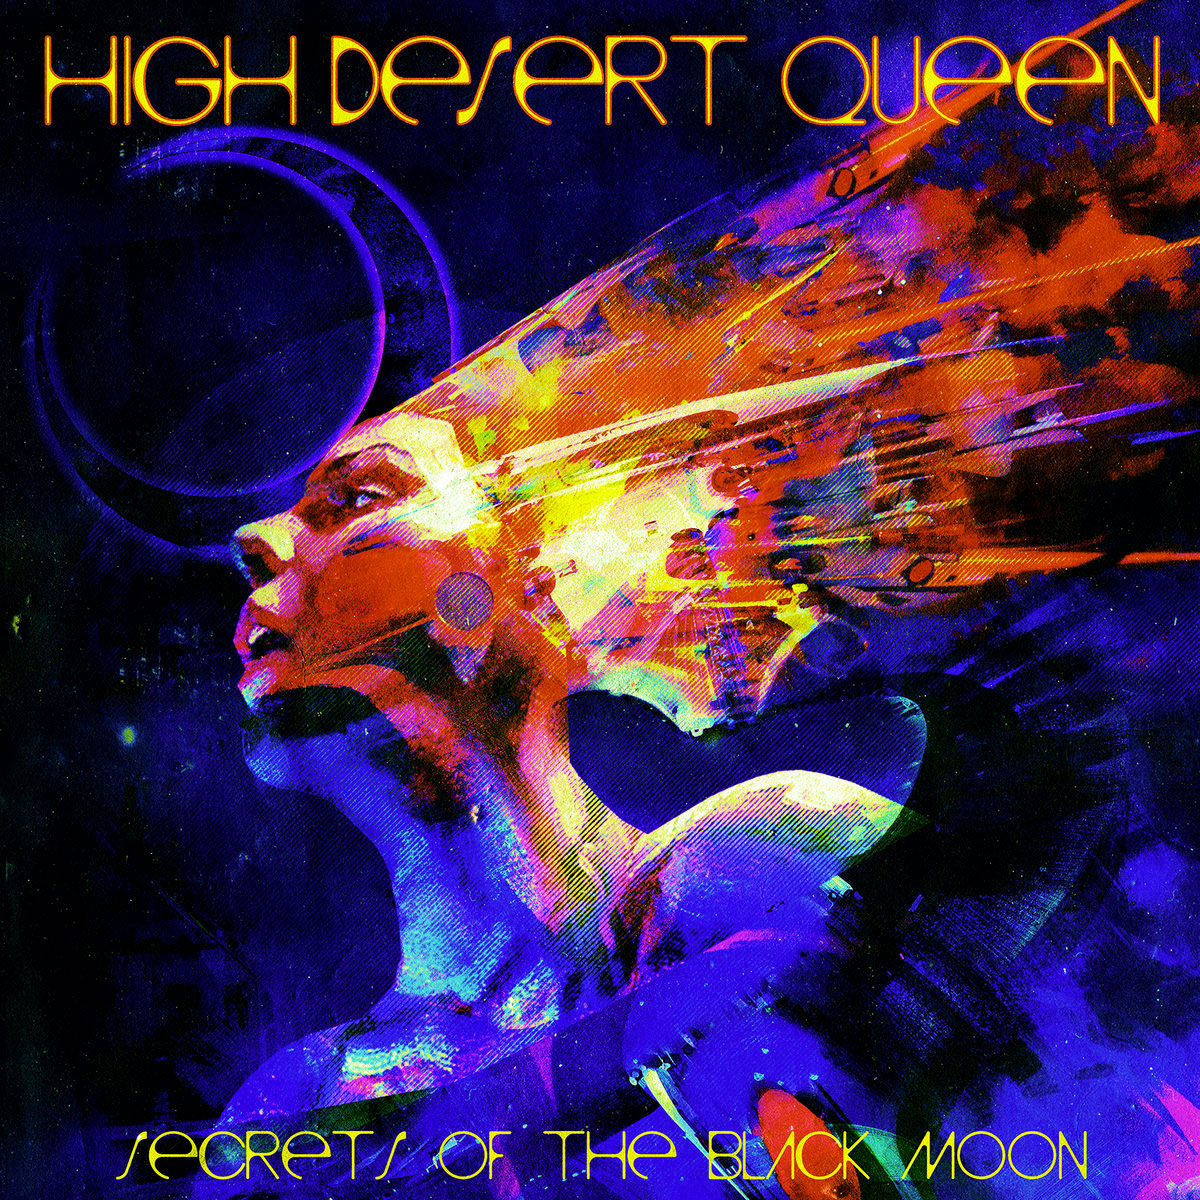 Secrets of the Black Moon by High Desert Queen